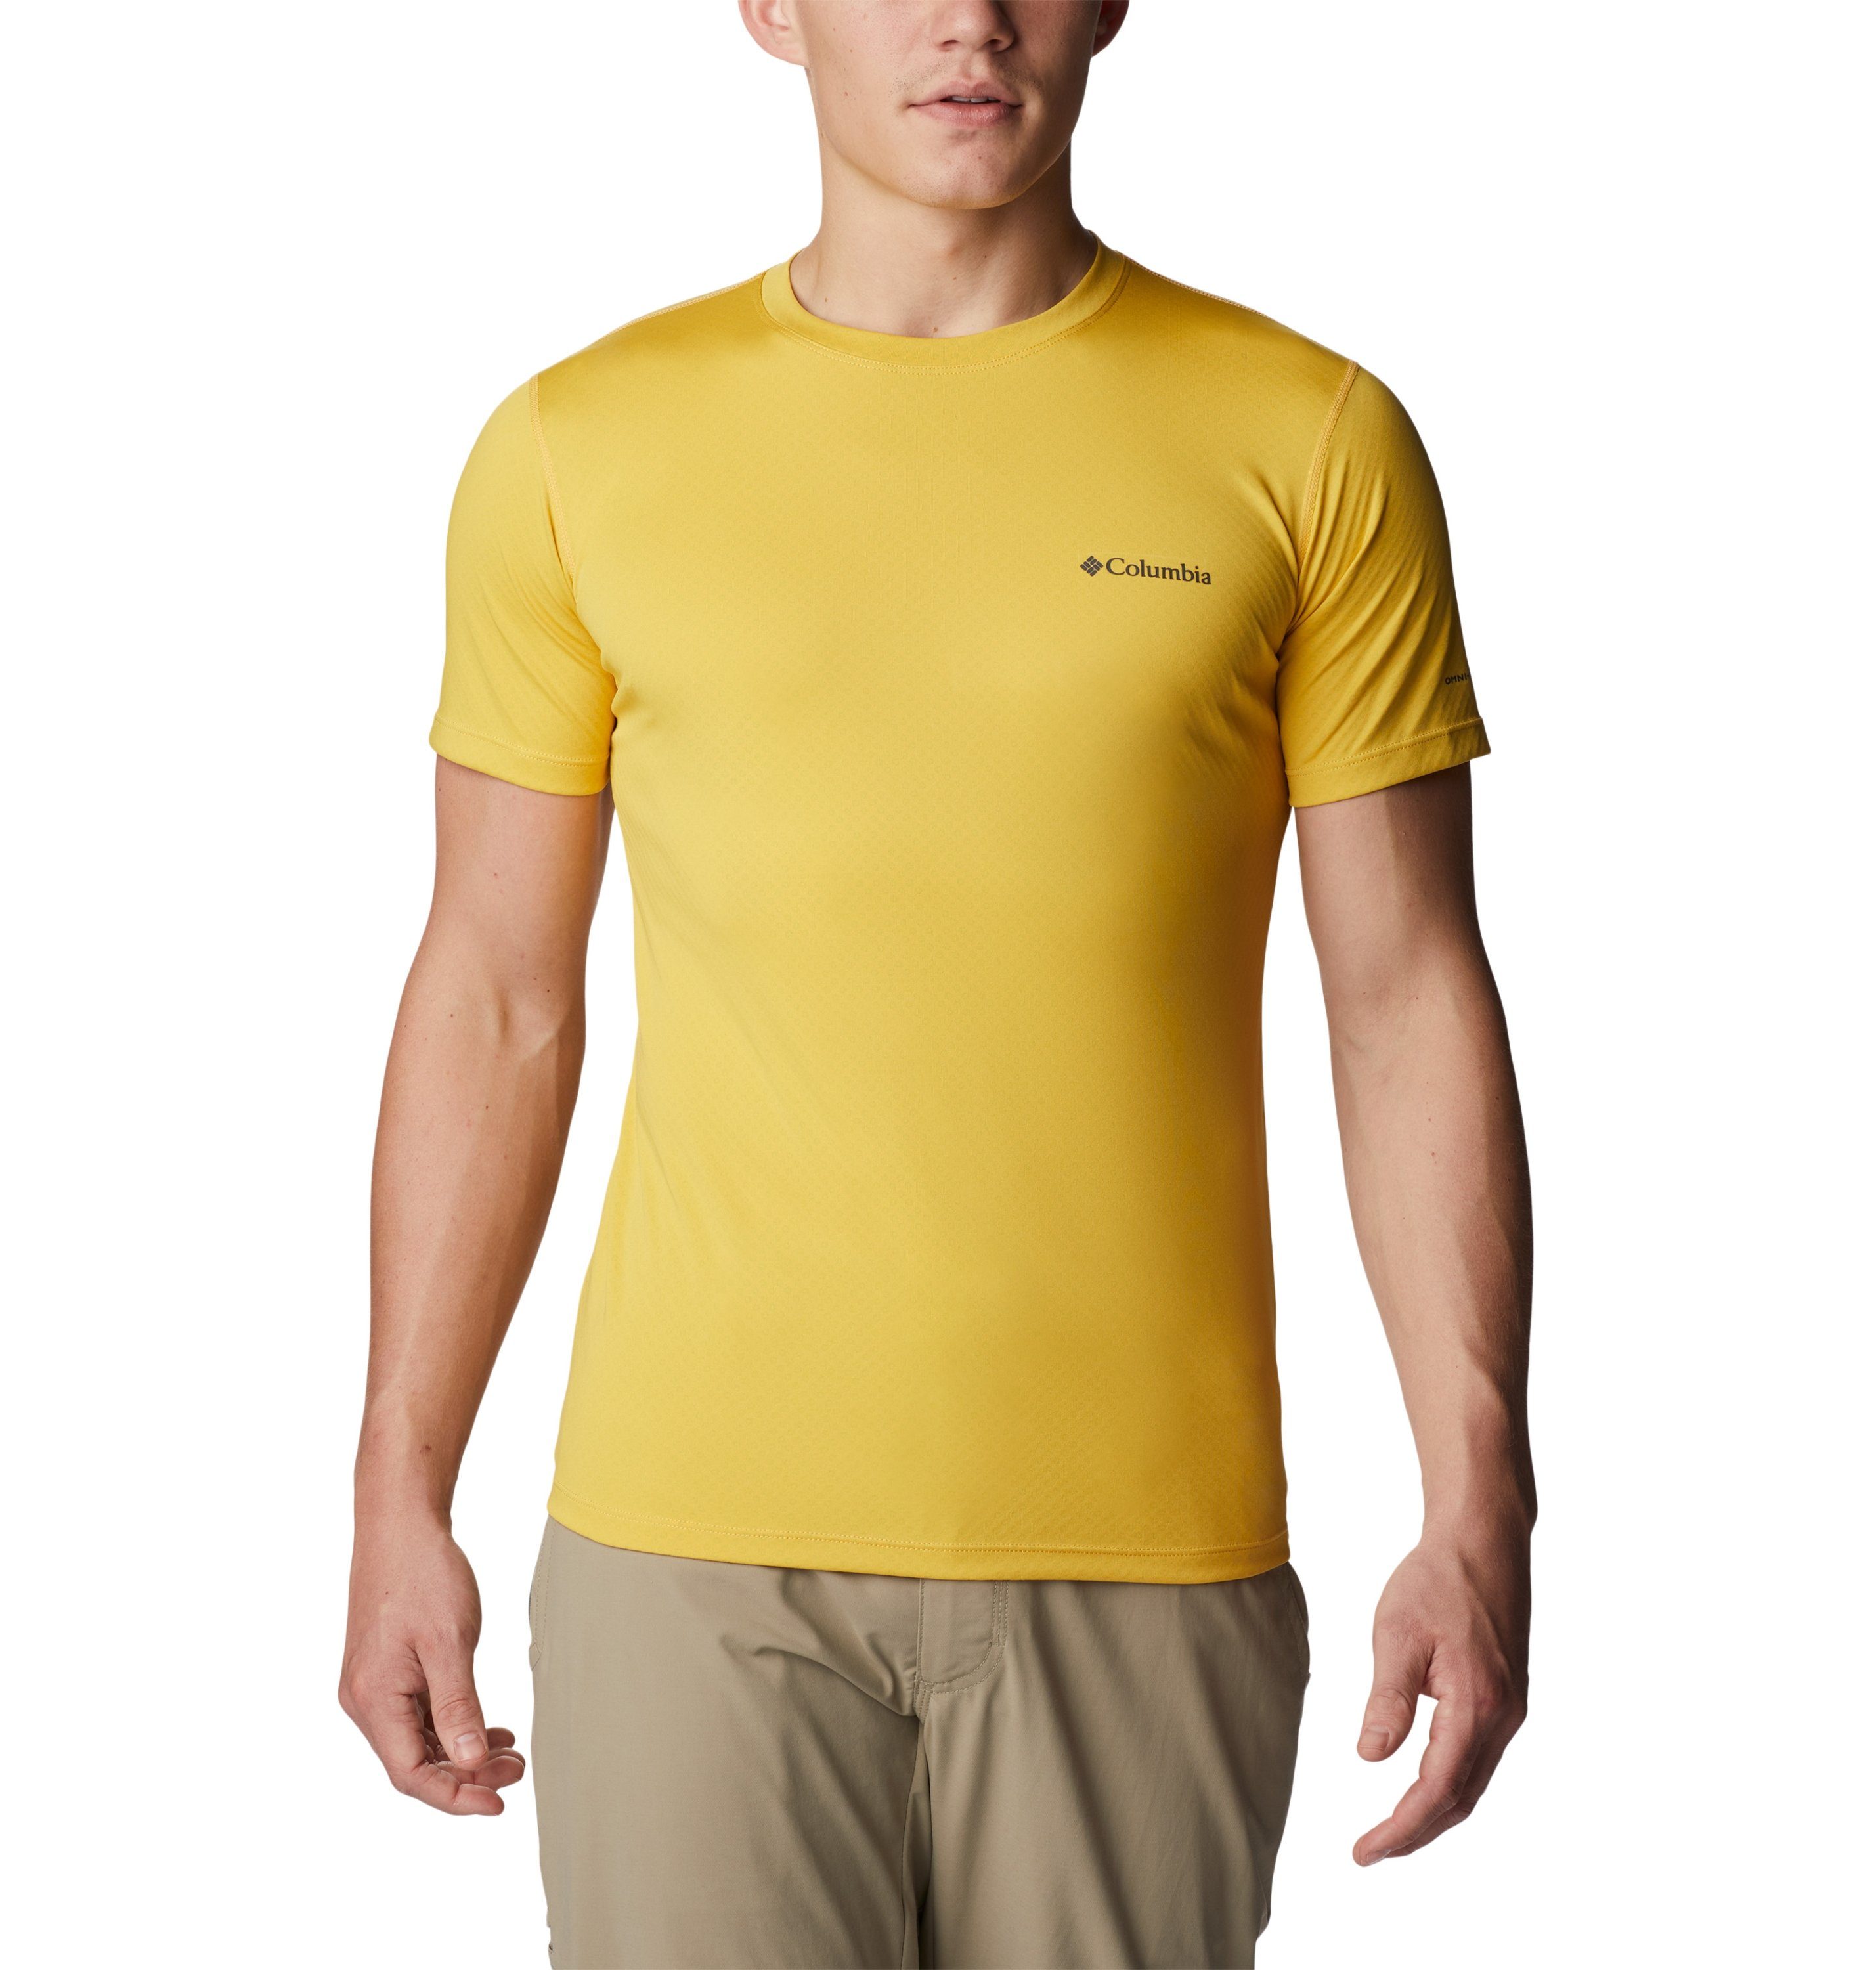 Columbia T-Shirt Columbia Sleeve Golden Zero Rules Nugget, Ancient Fossil Shirt Short Herren